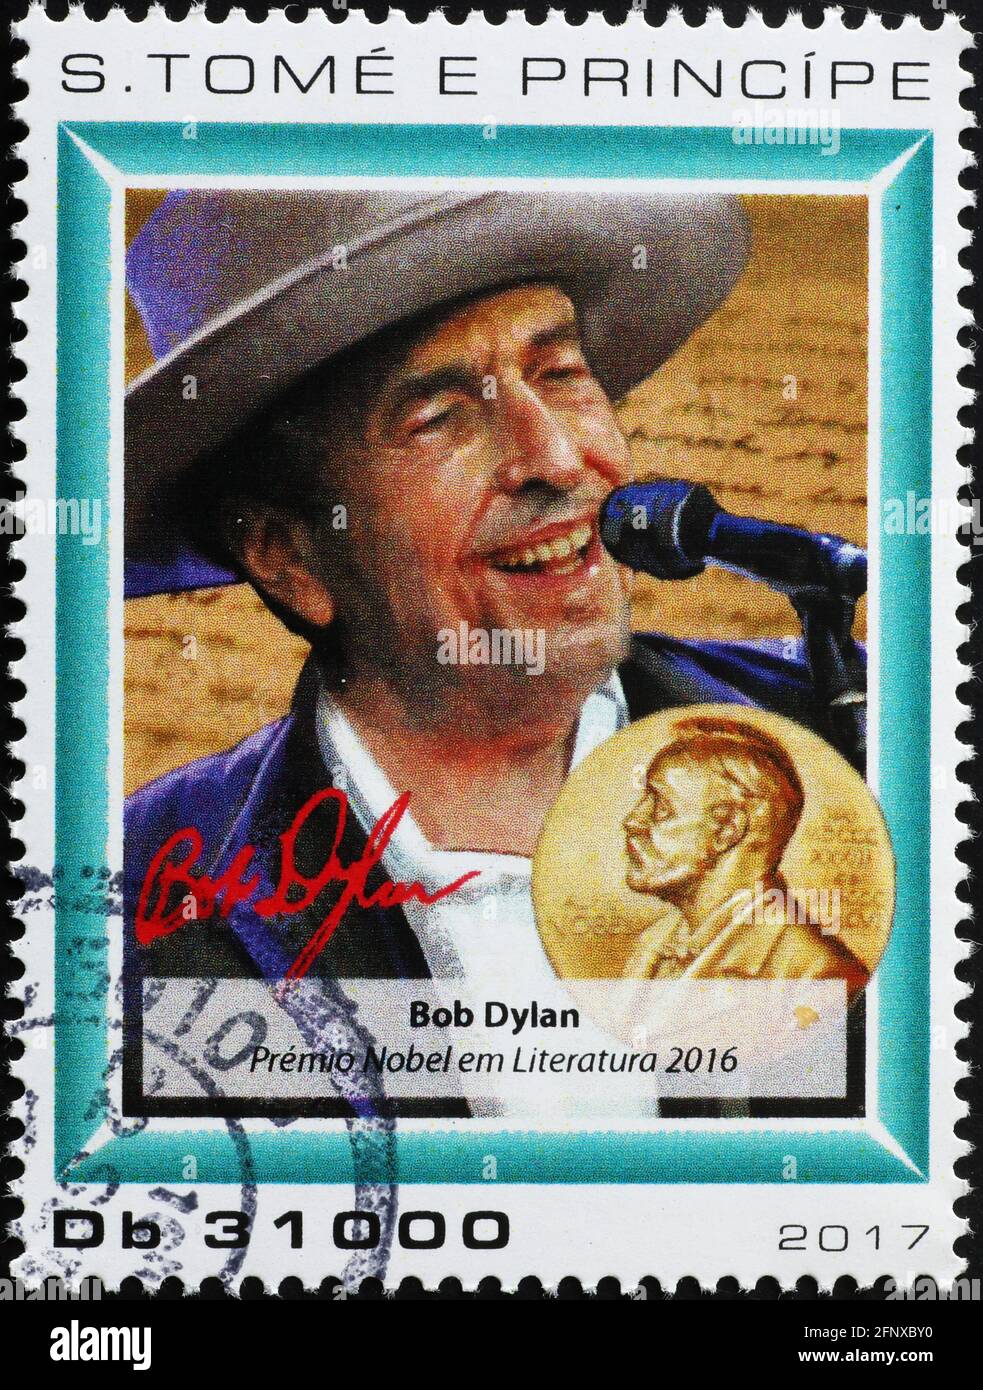 Nobel prize Bob Dylan on postage stamp Stock Photo